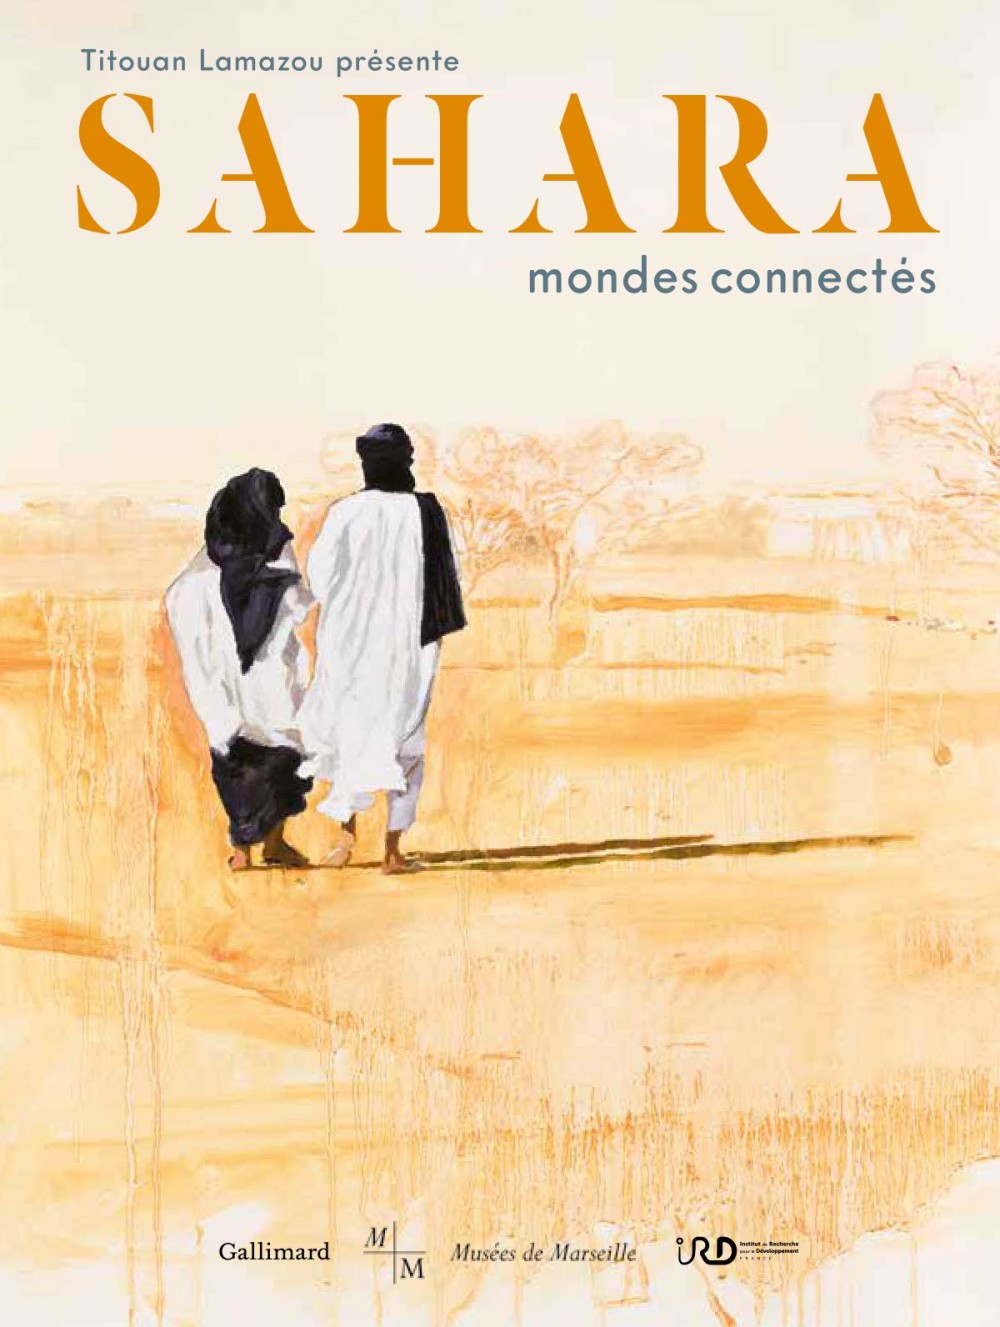 Sahara, mondes connectés